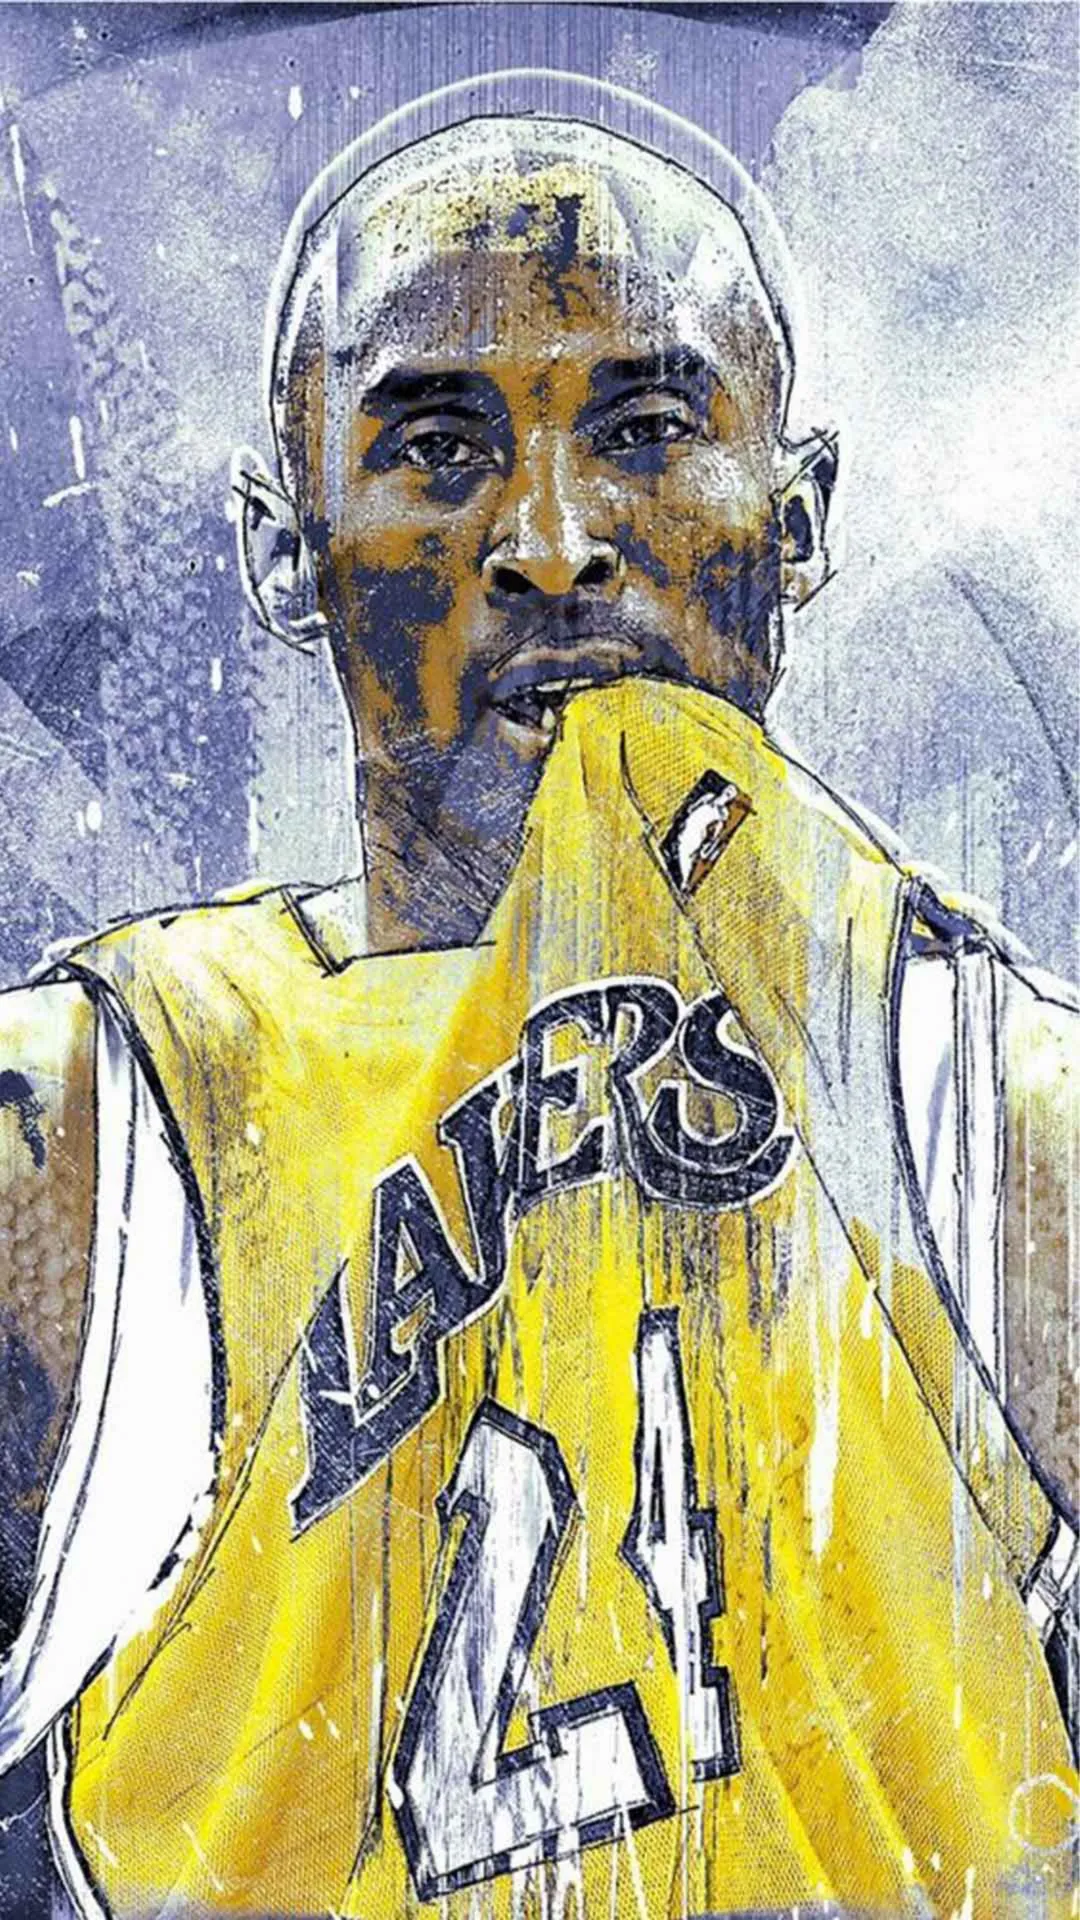 Kobe Bryant Image Wallpaper